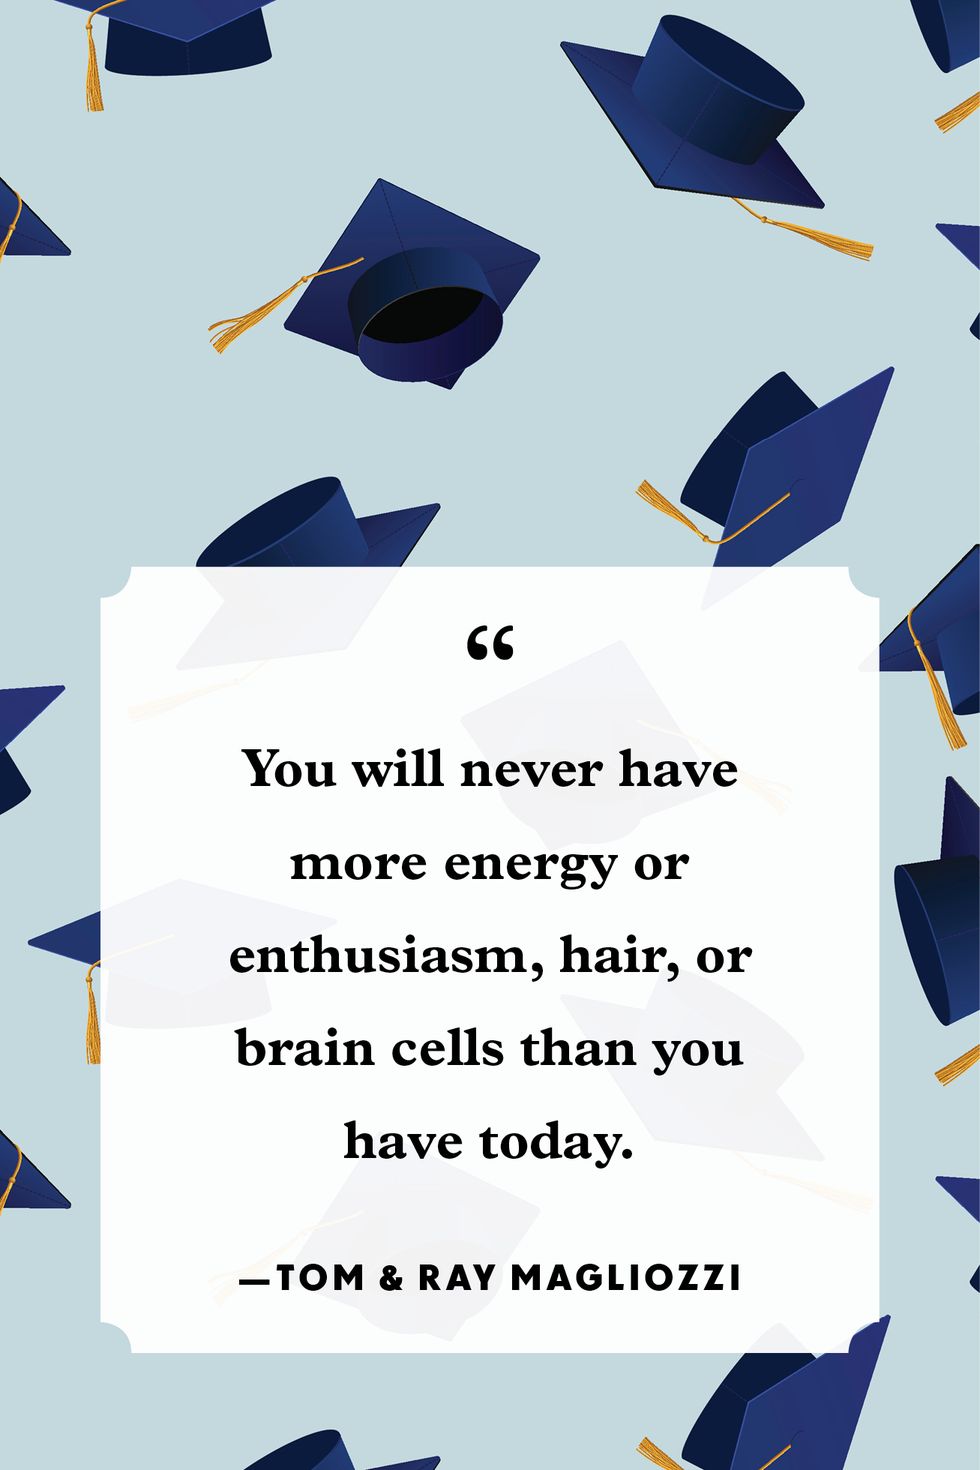 funny graduation quotes